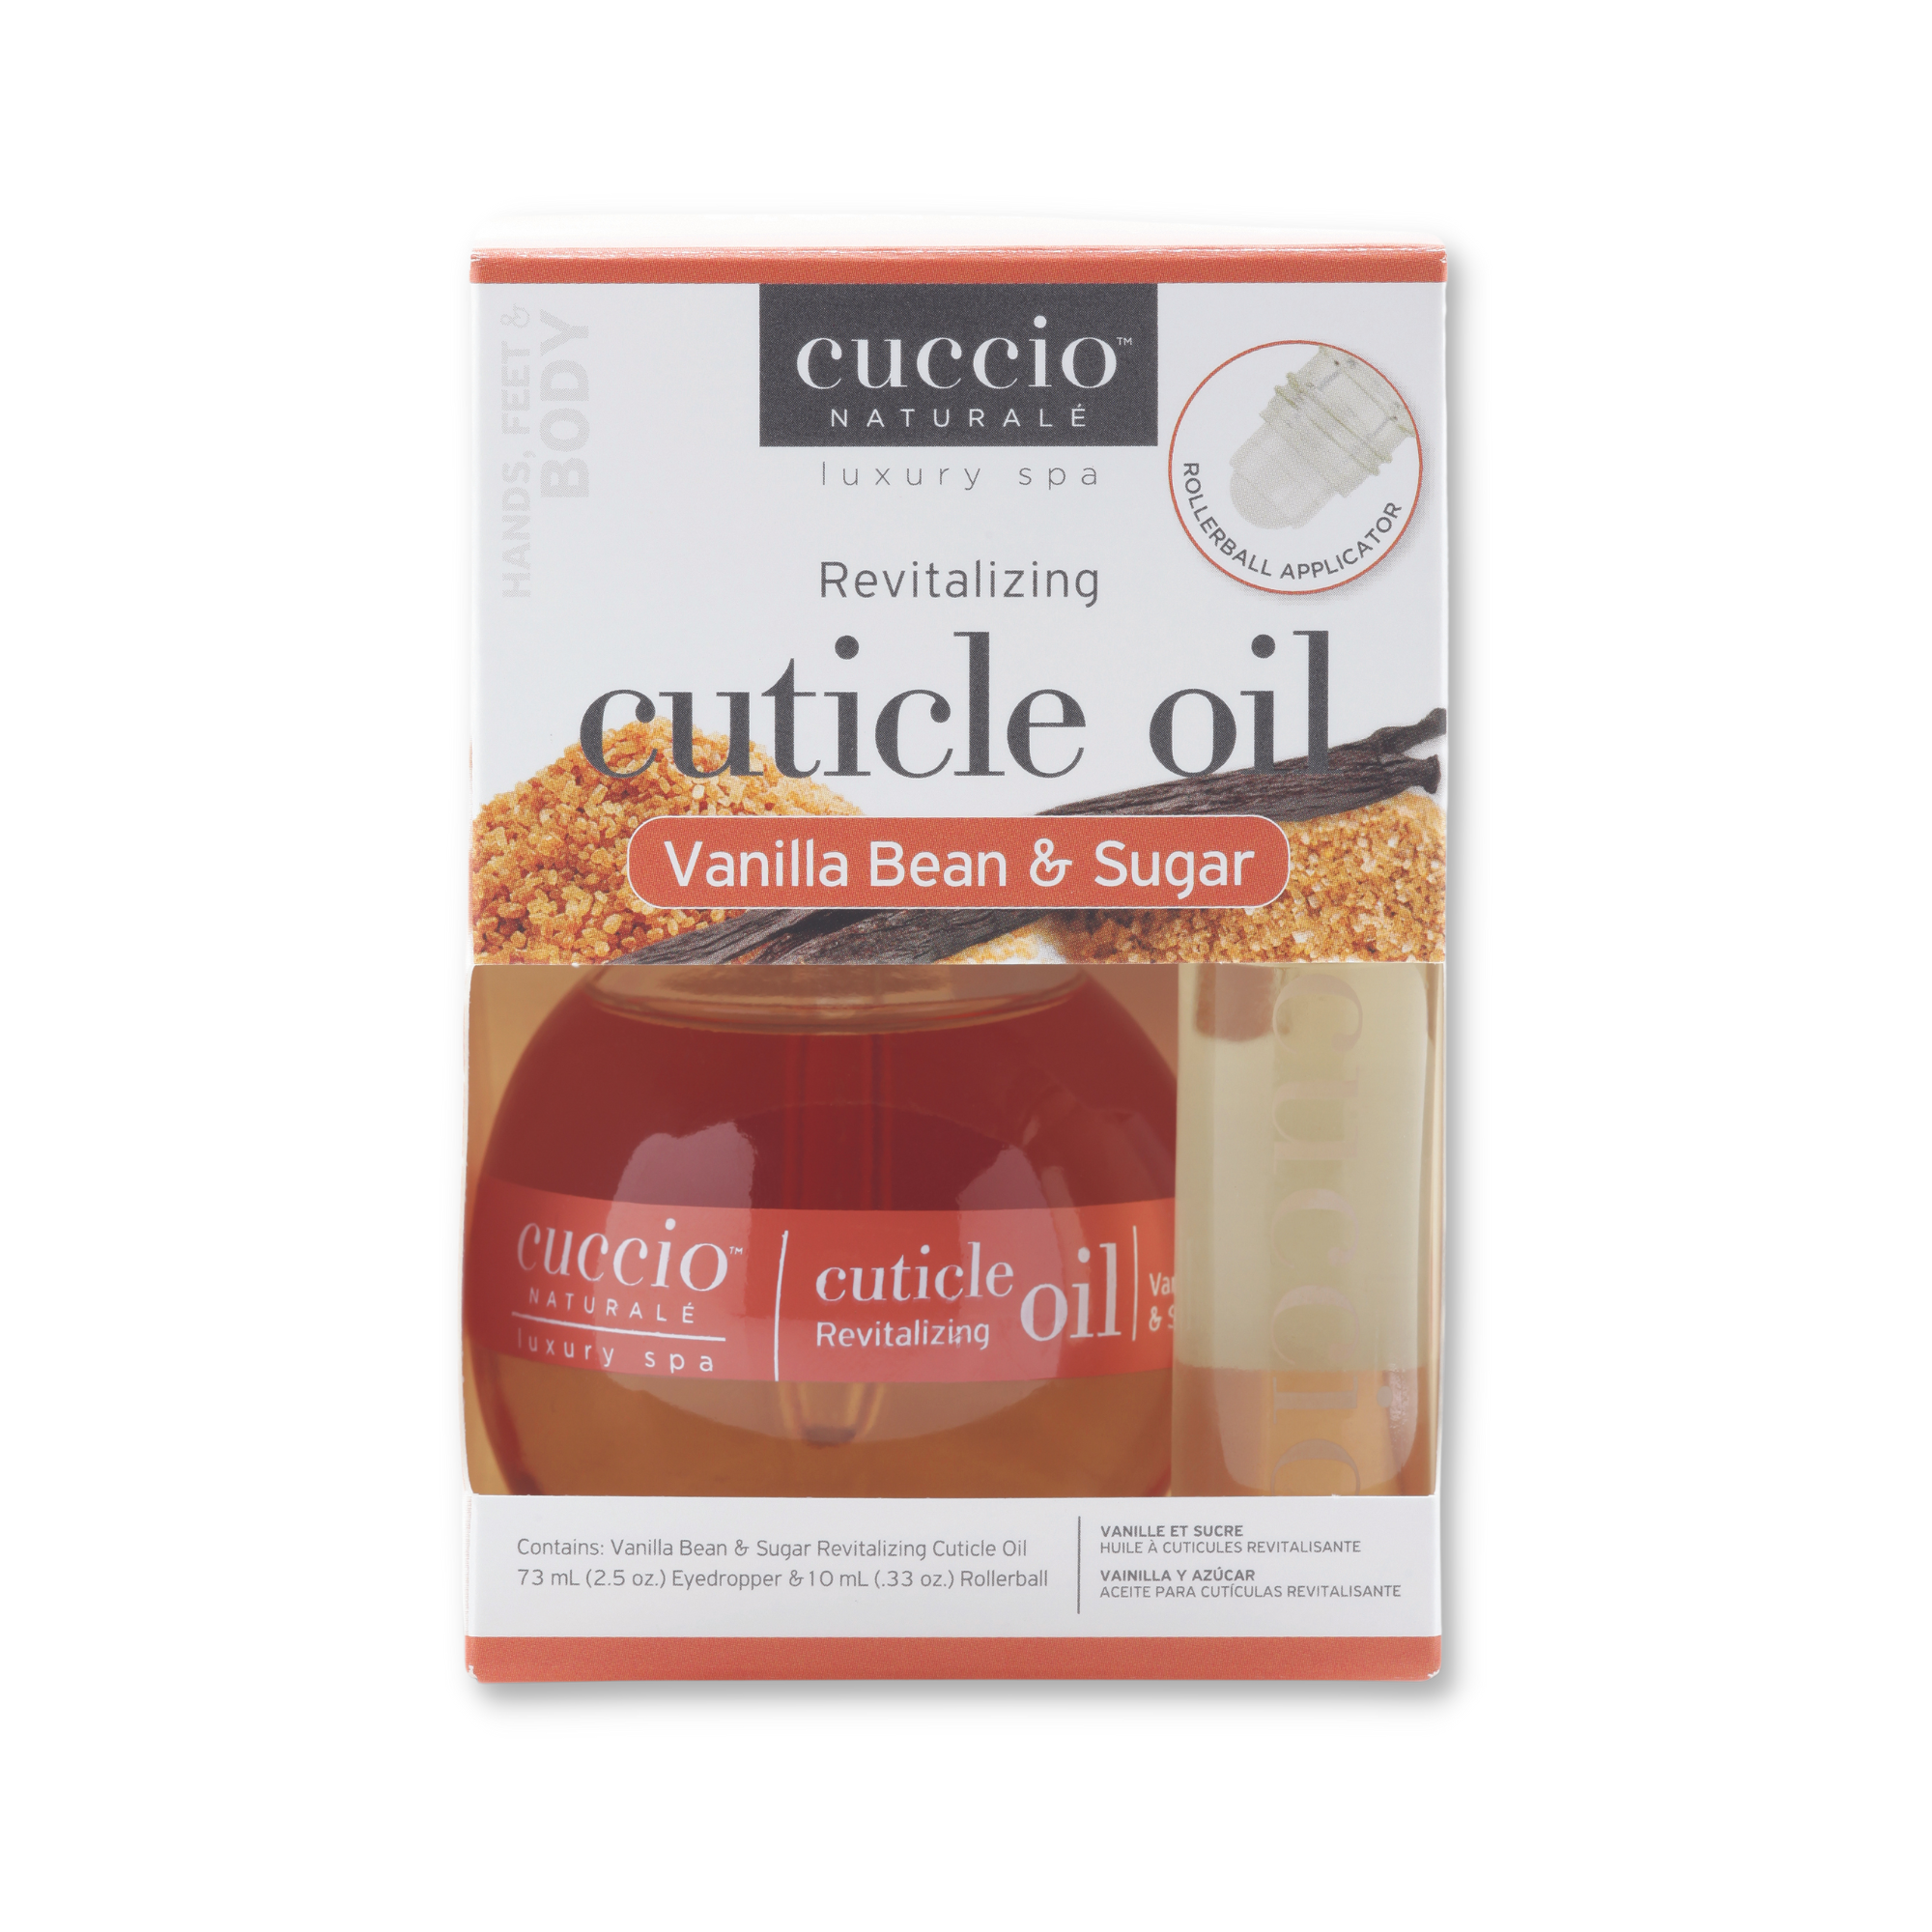 Cuccio Naturalé Cuticle Revitalizing Oil Duo Pack - Vanilla Bean & Sugar